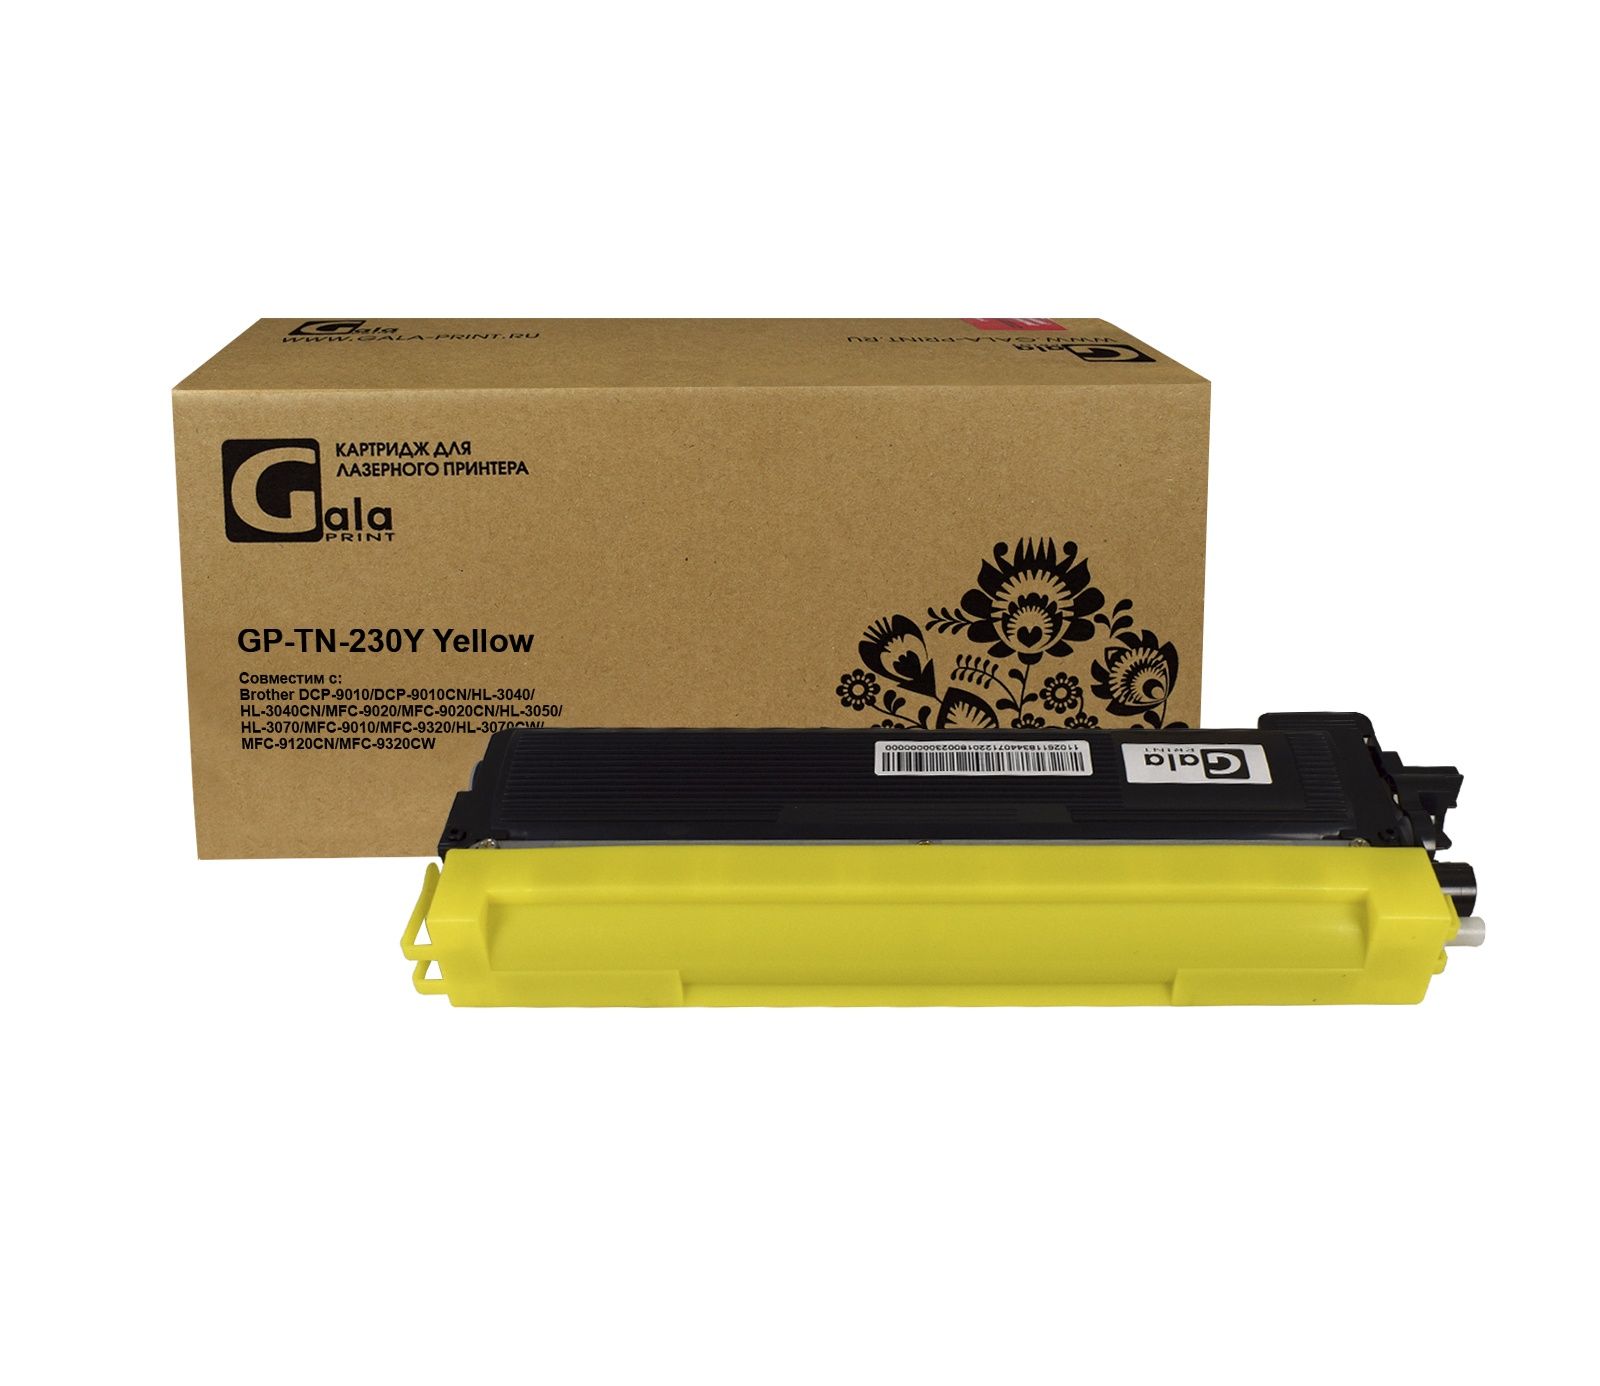 Картридж GP-TN-230Y для принтеров Brother DCP-9010/DCP-9010CN/HL-3040/HL-3040CN/MFC-9020/MFC-9020CN/HL-3050/HL-3070/MFC-9010/MFC-9320/HL-3070CW/MFC-9120CN/MFC-9320CW Yellow 1400 копий GalaPrint